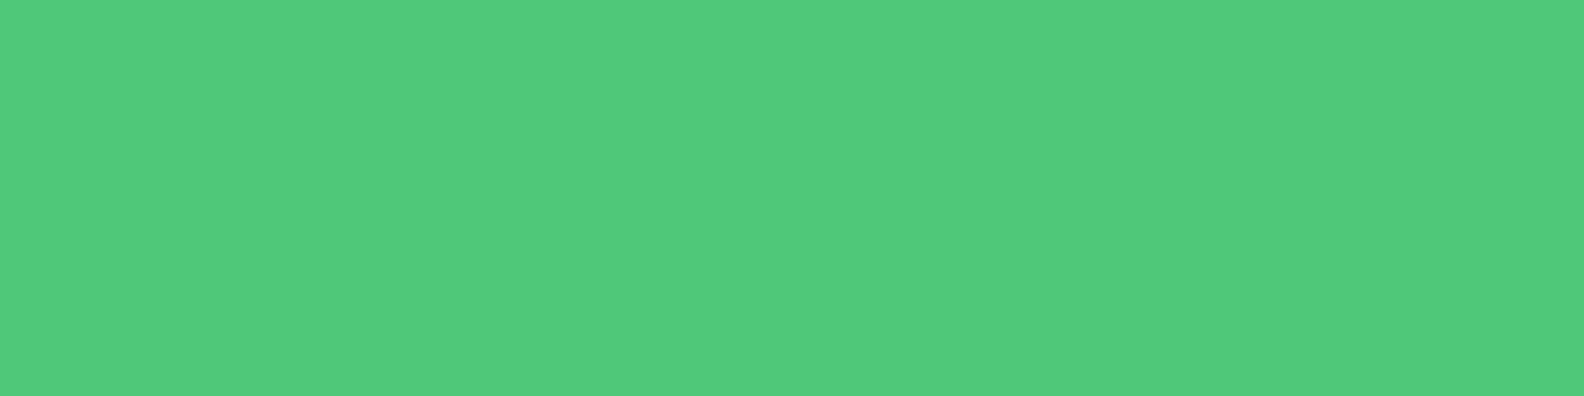 1584x396 Paris Green Solid Color Background